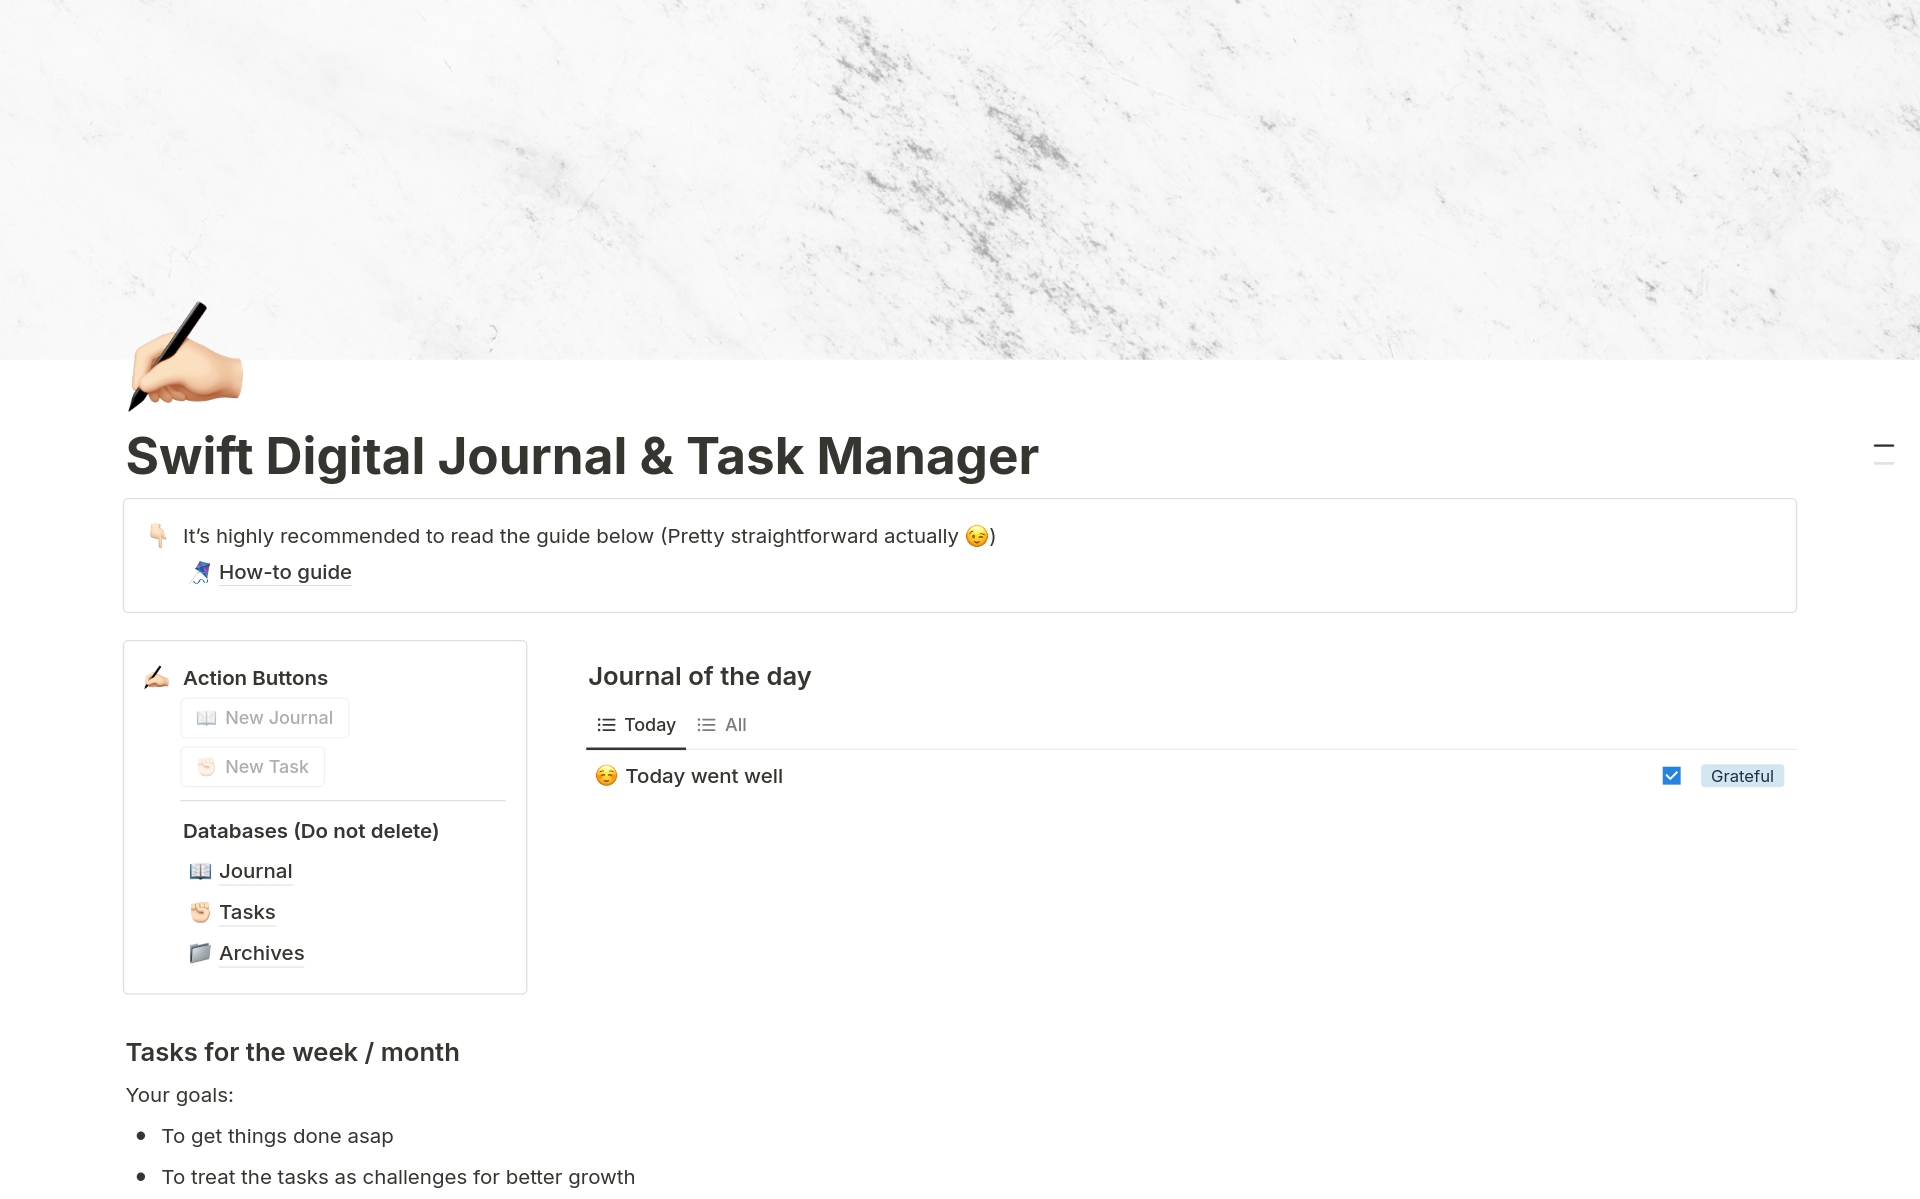 Swift thinking, efficient doing. 
Journal + Tasks = DONE!